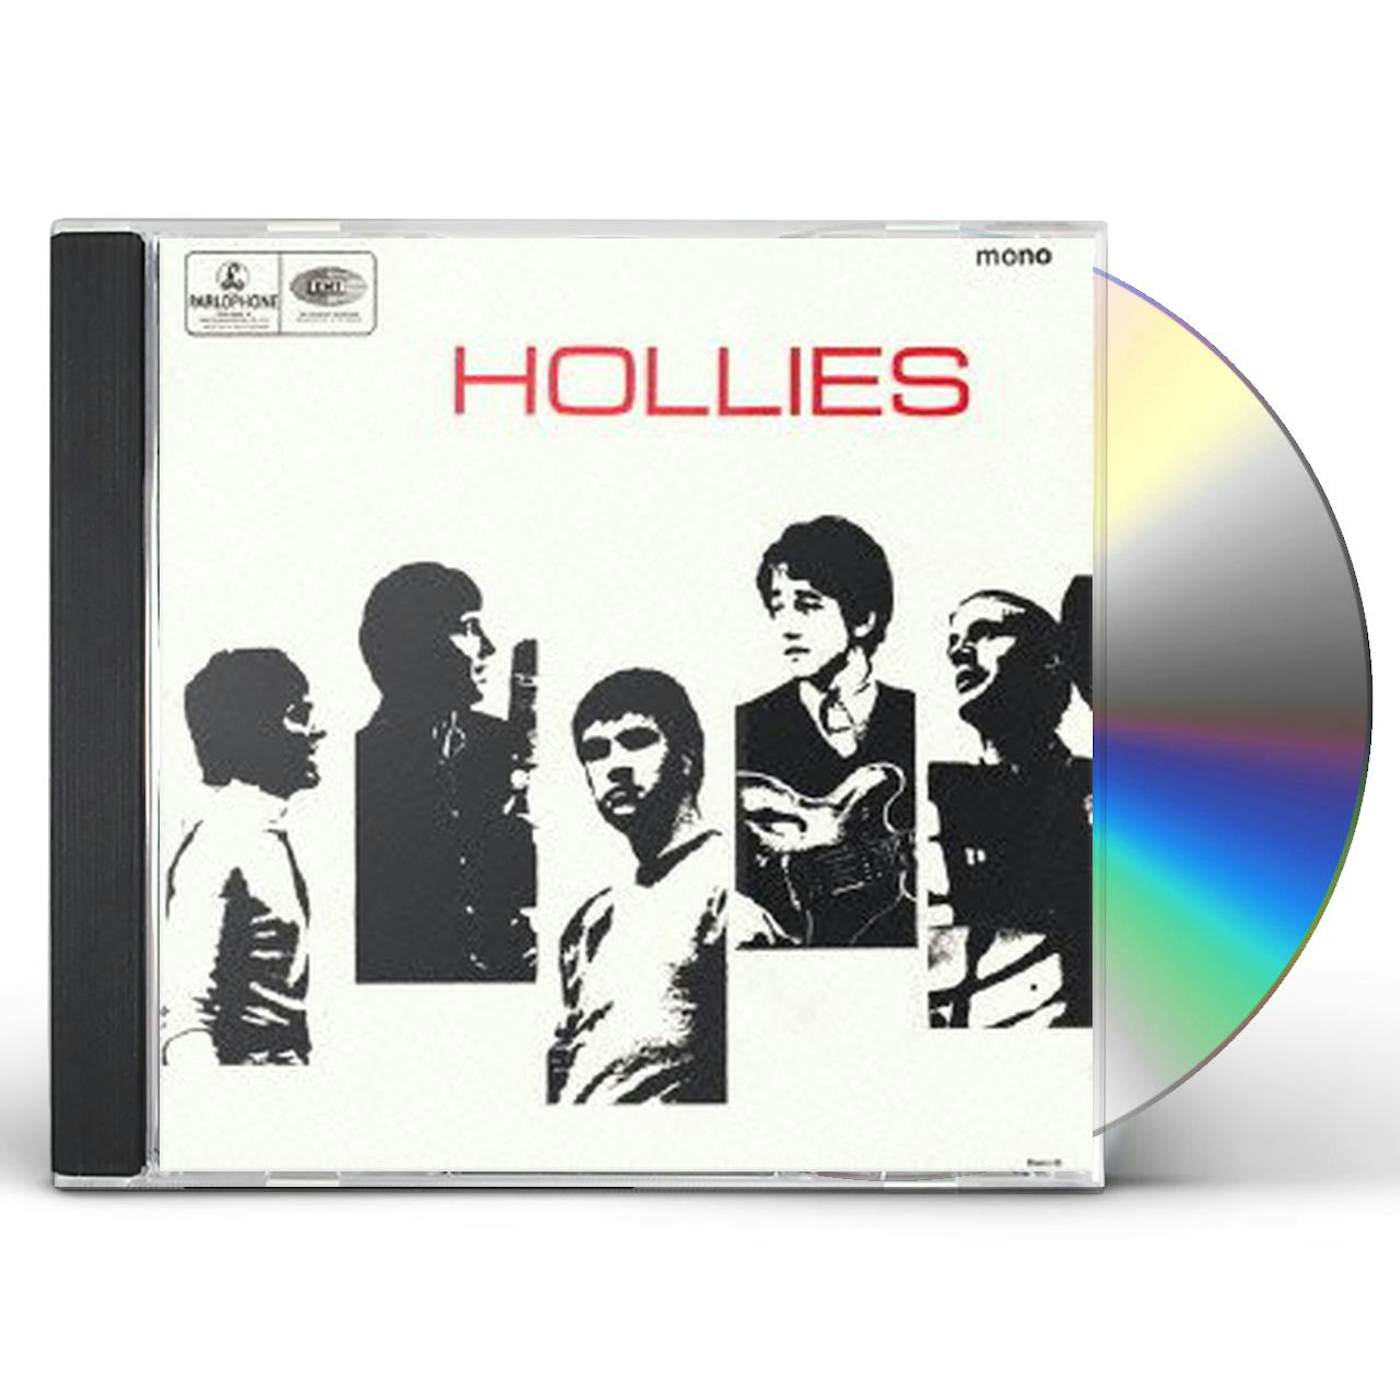 The Hollies CD